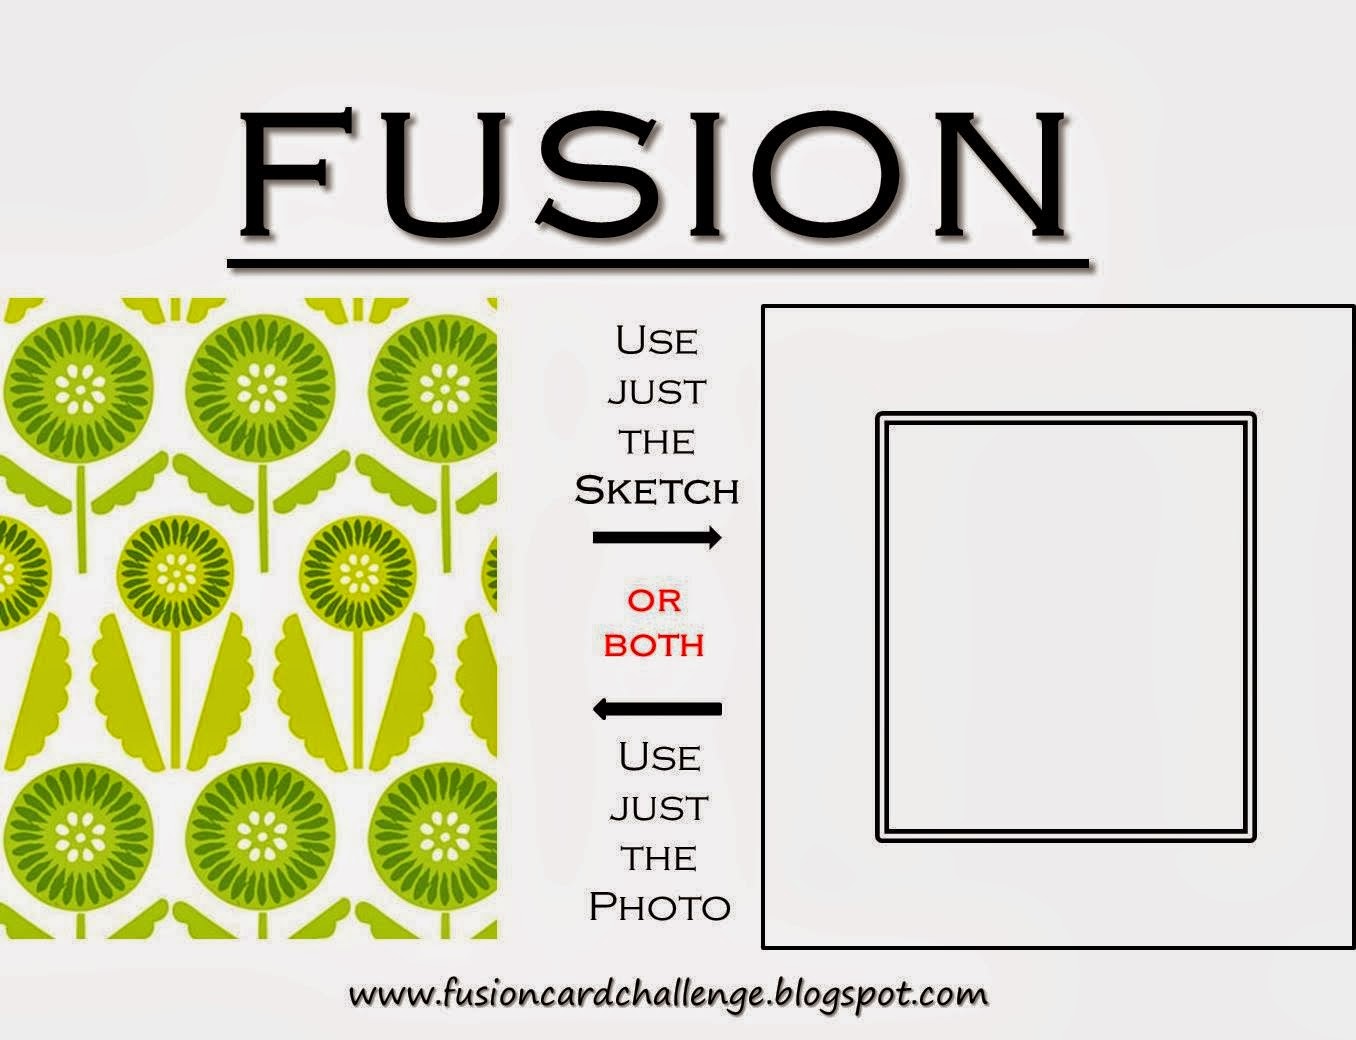 http://fusioncardchallenge.blogspot.com/2014/03/fusion-card-challenge-6.html